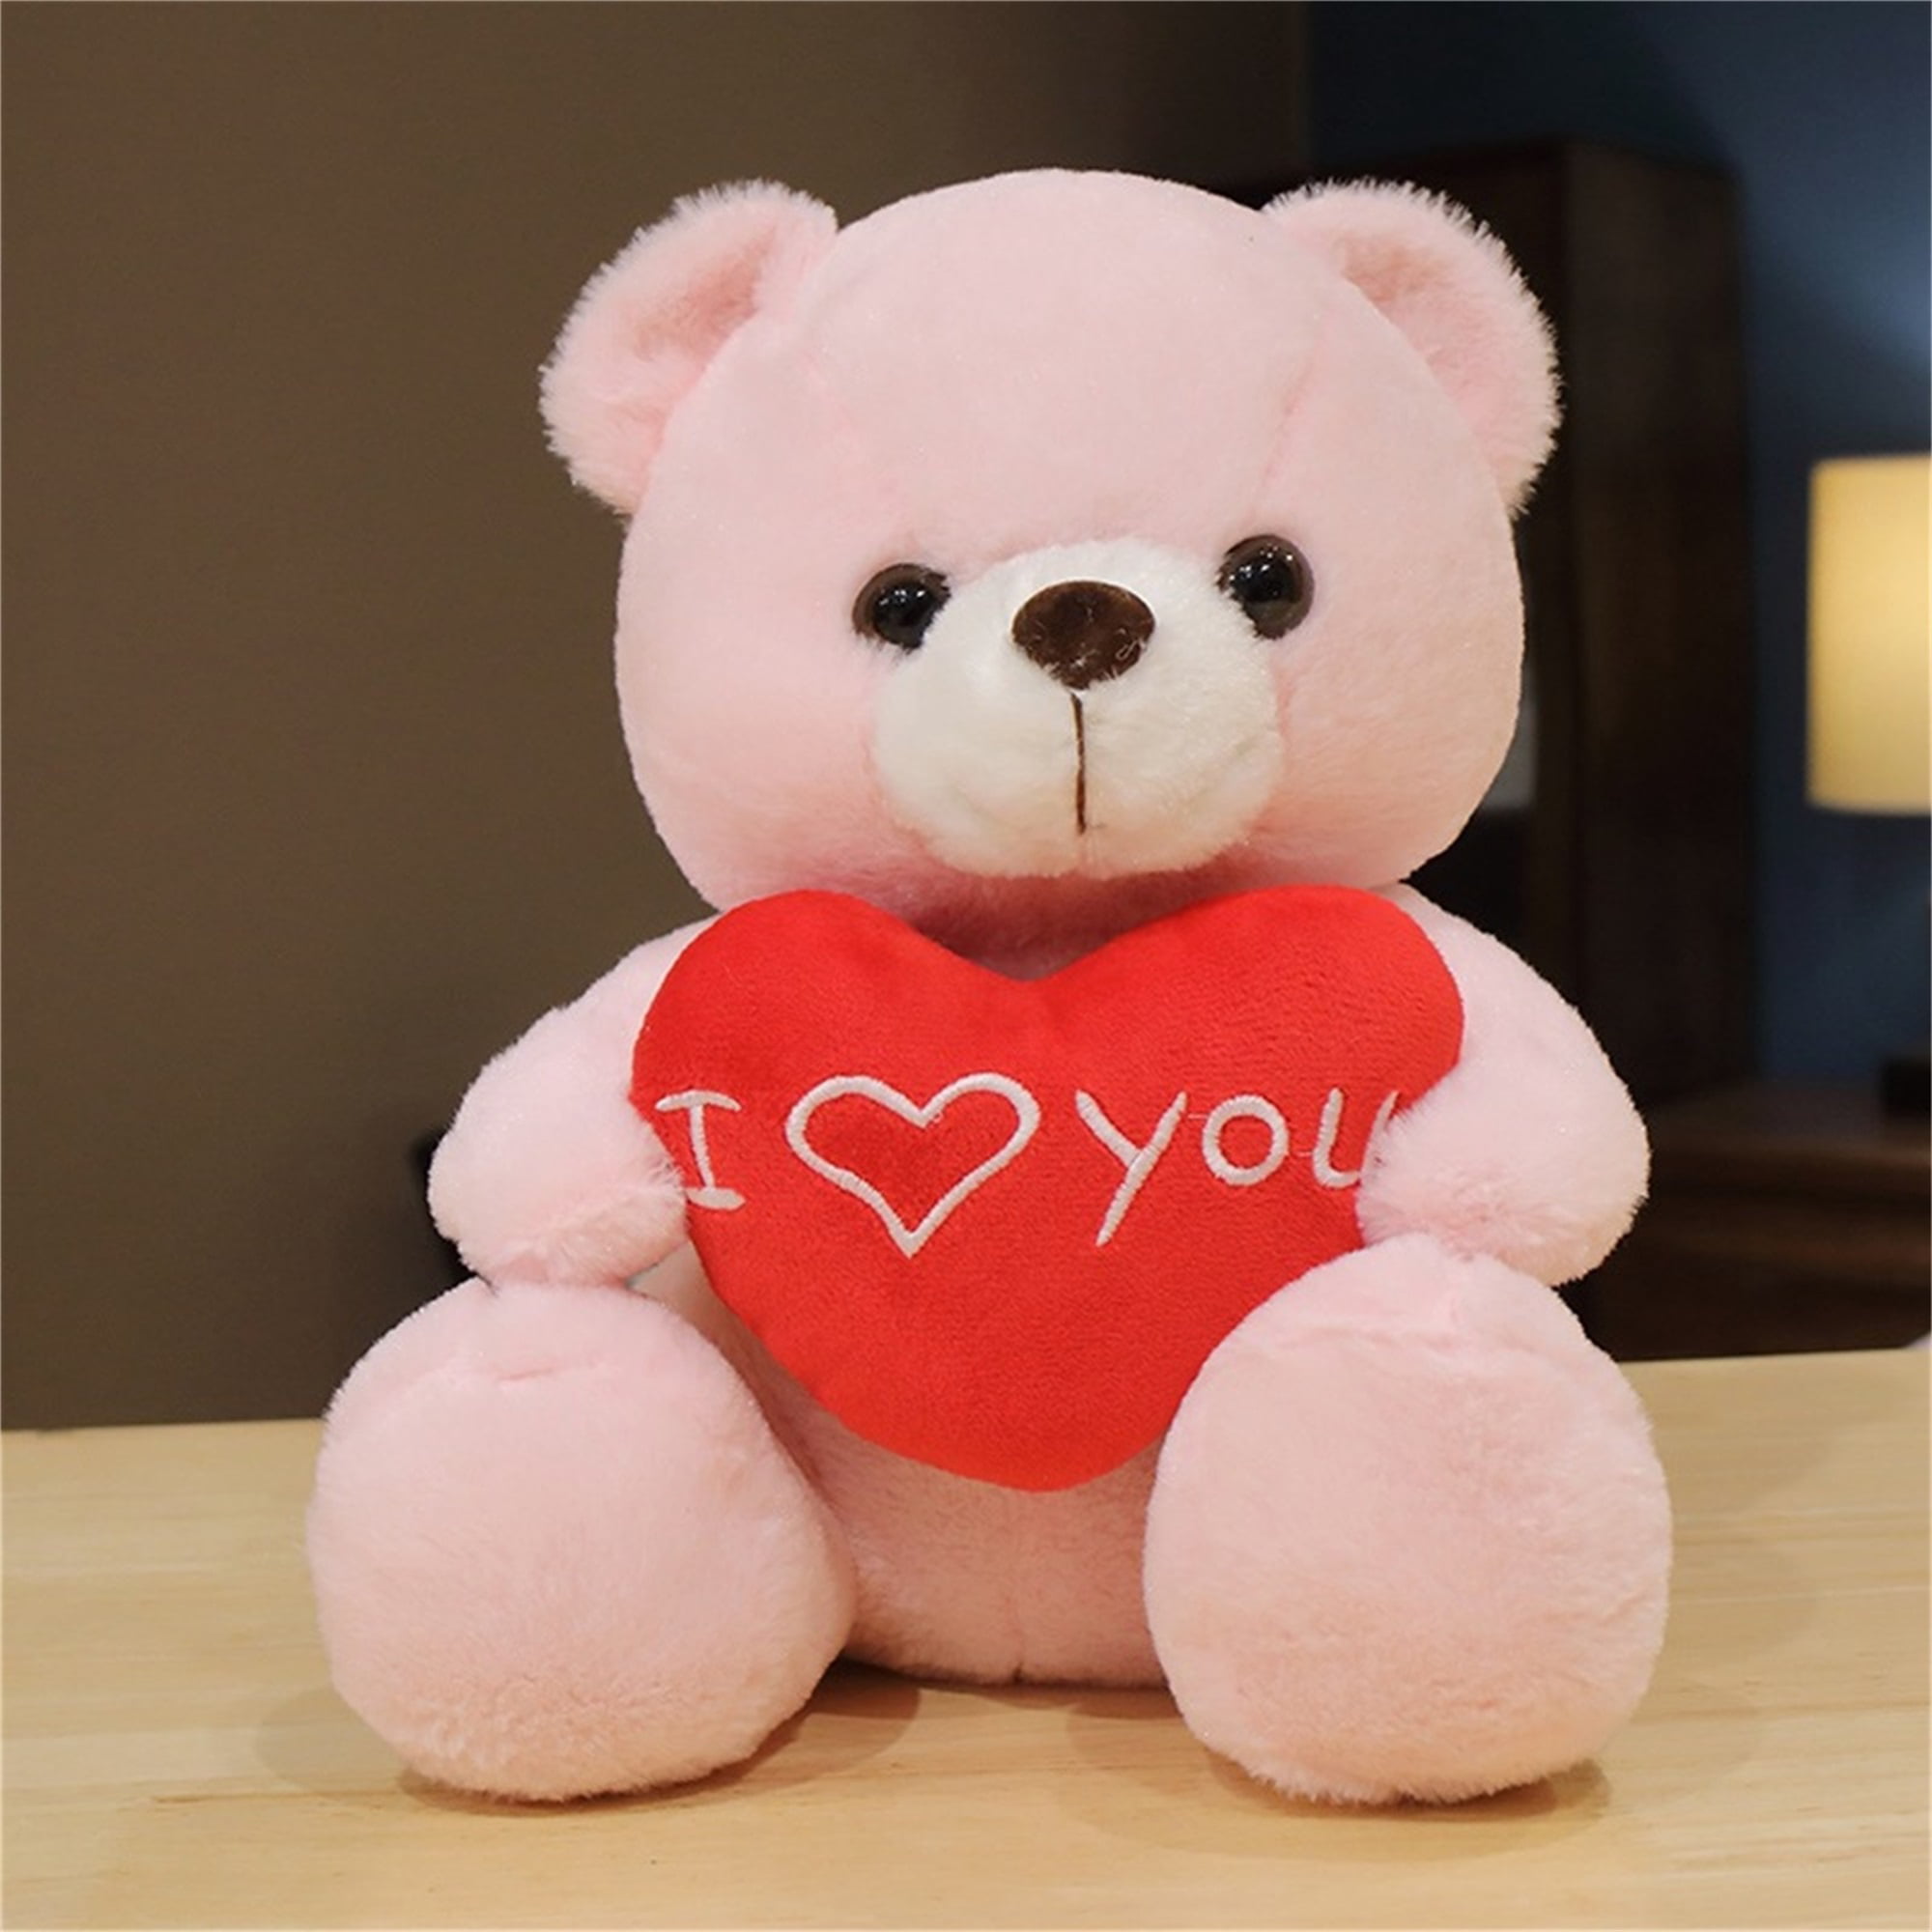 Amazon.com: Teddy Bear Couple Gift: Funny 13 Inch Teddy Bear Stuffed Animal  : I Love You : Romantic Gift : Best Couple Gift : Toys & Games